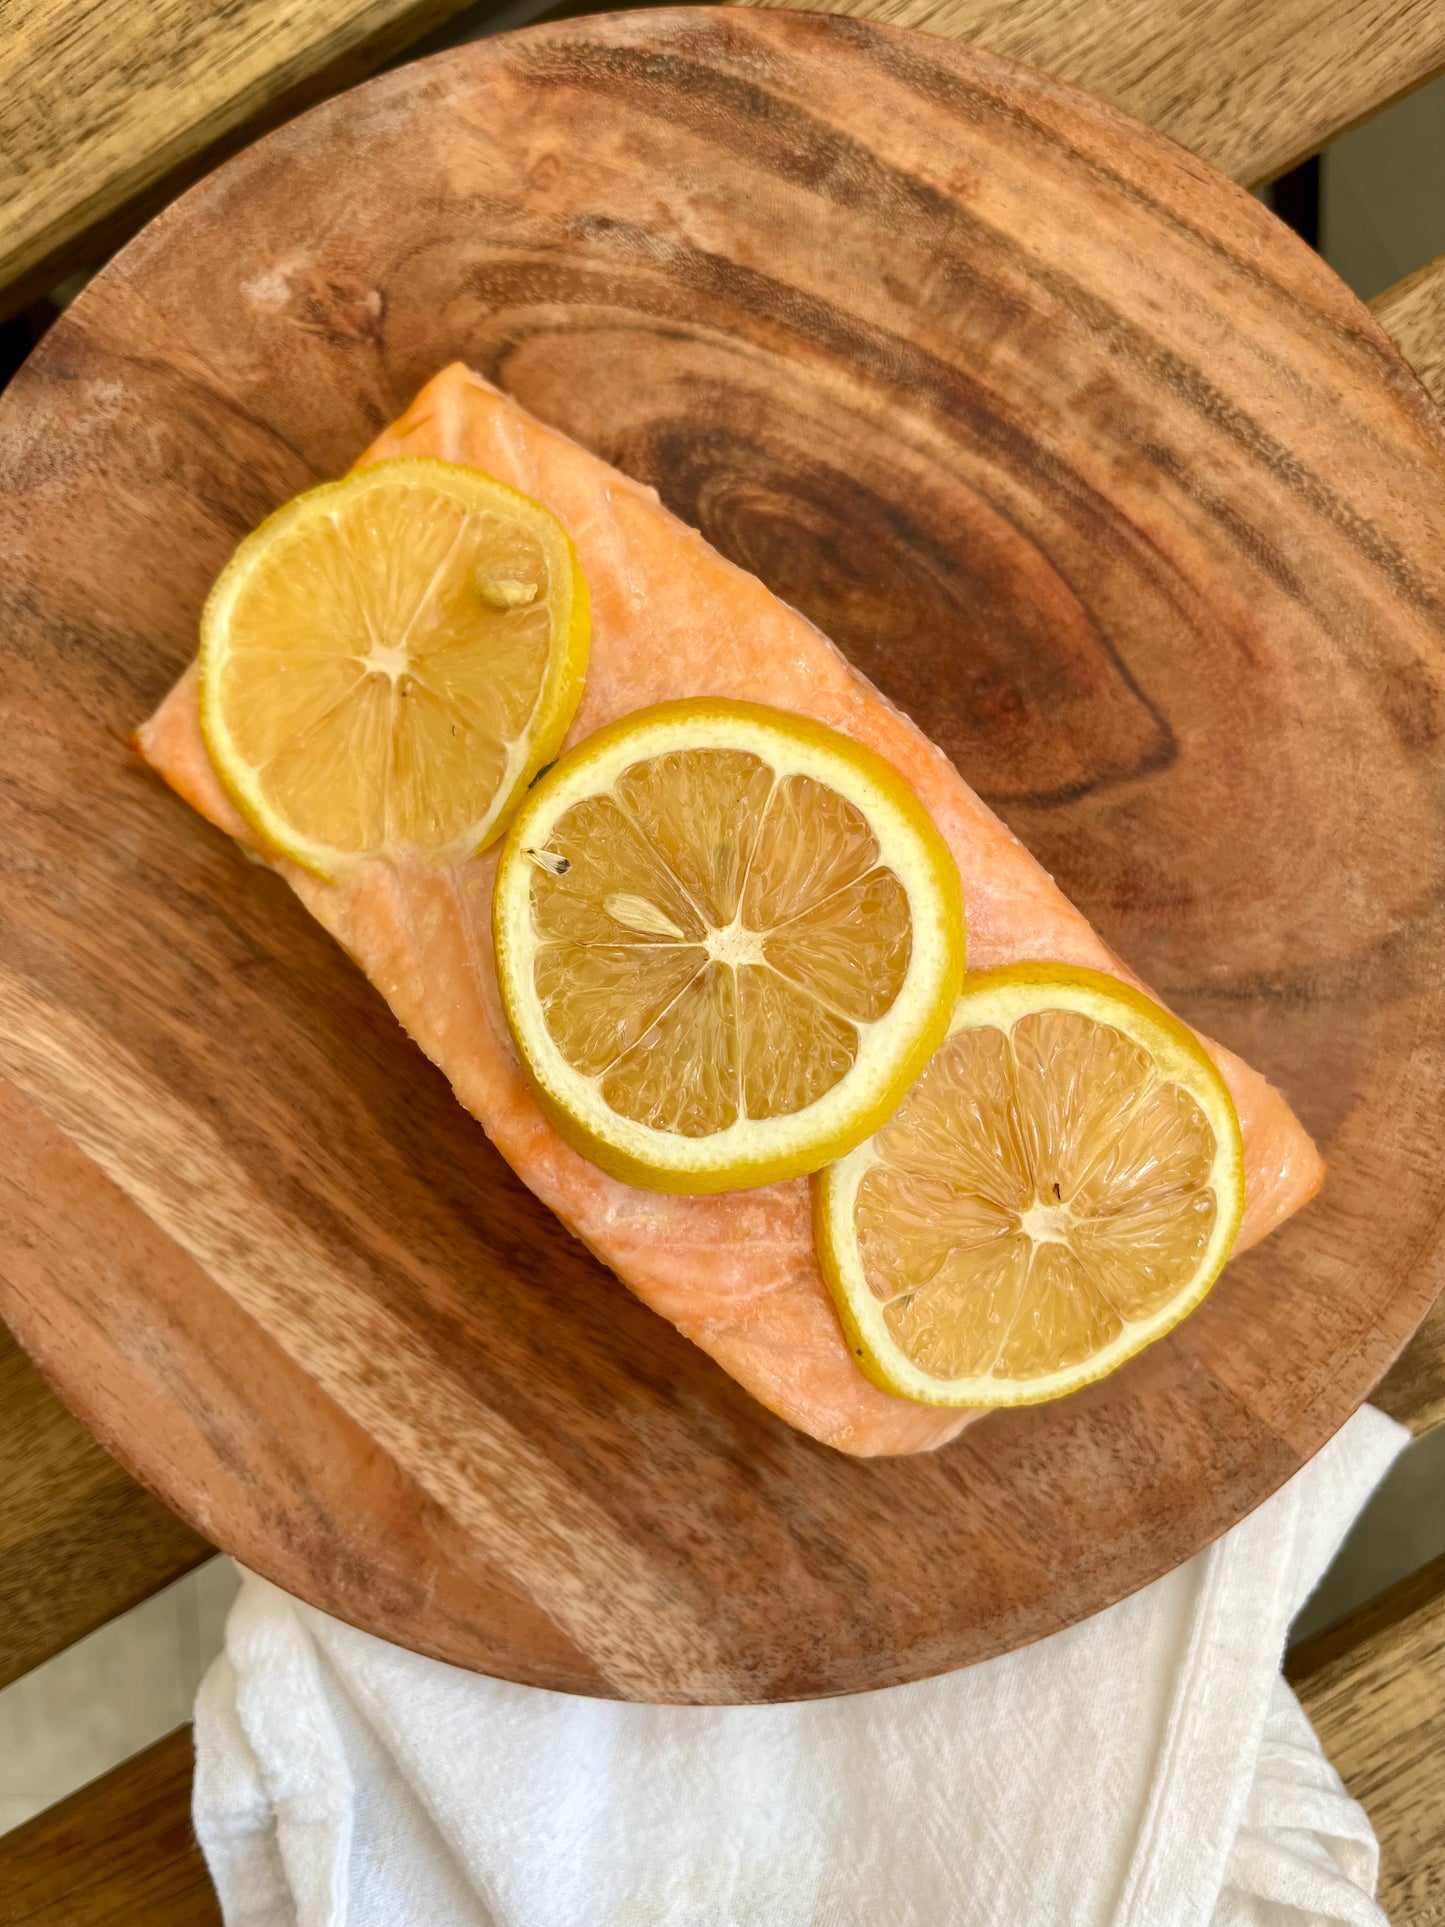 Roasted Salmon Filet (Sustainably Farmed)